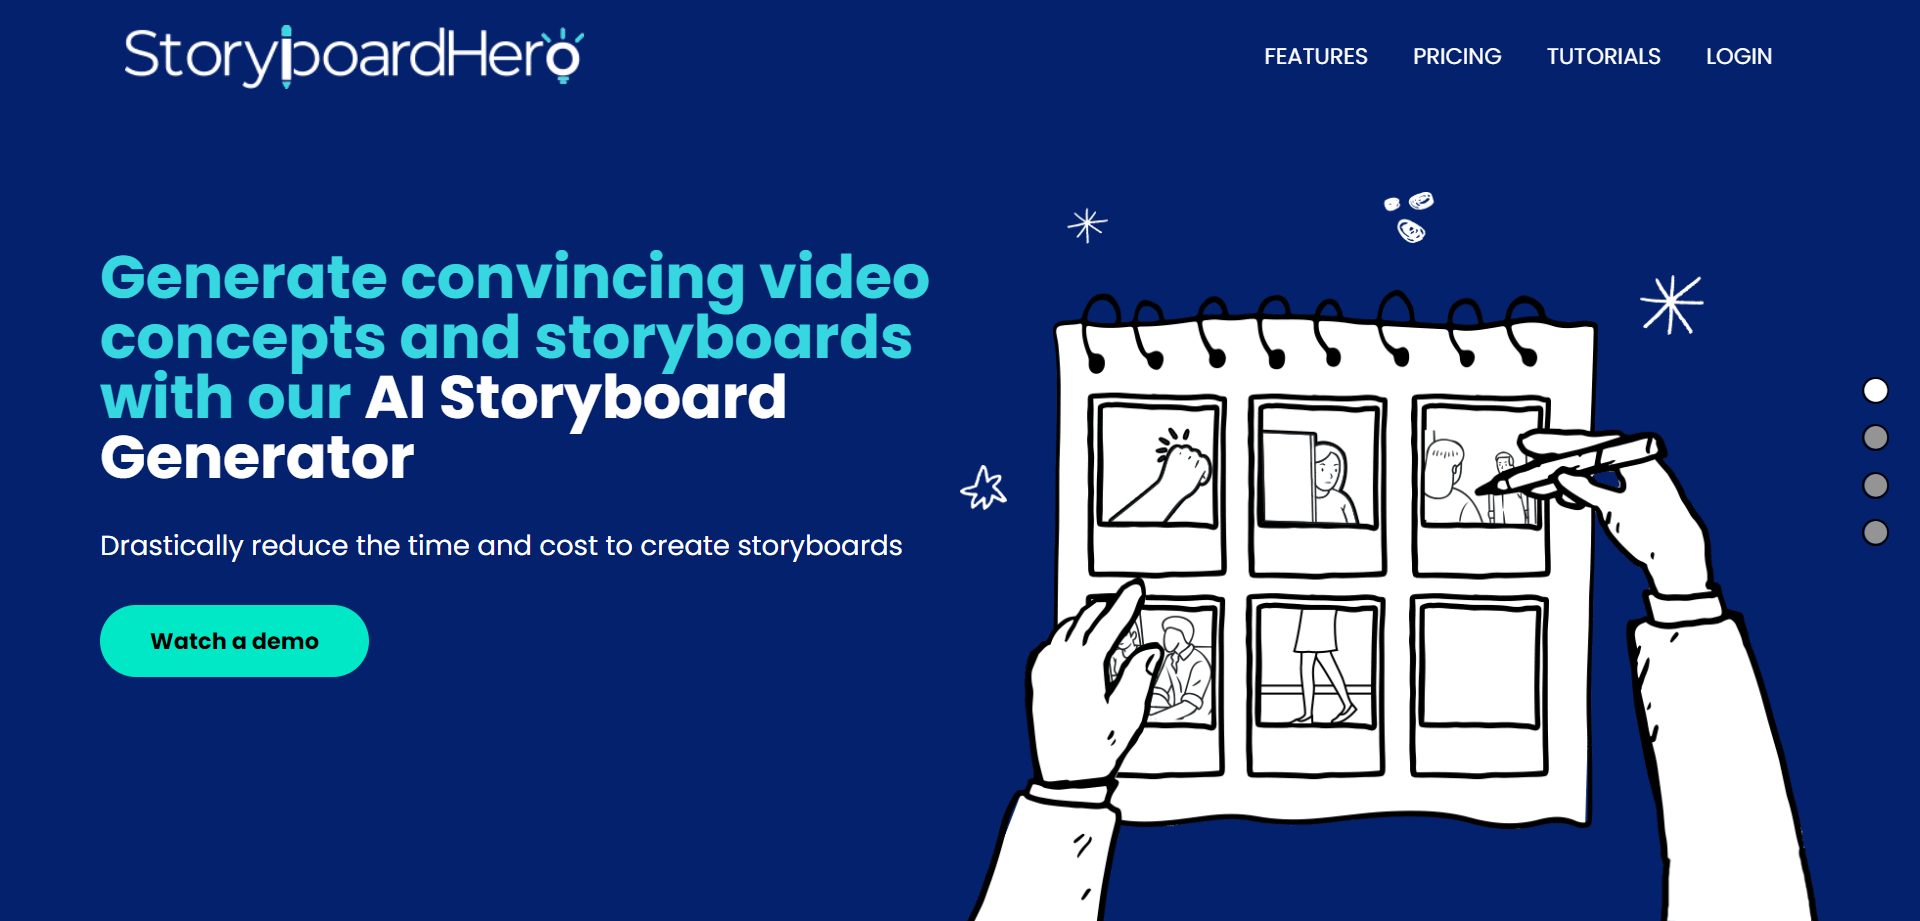 Storyboard Hero